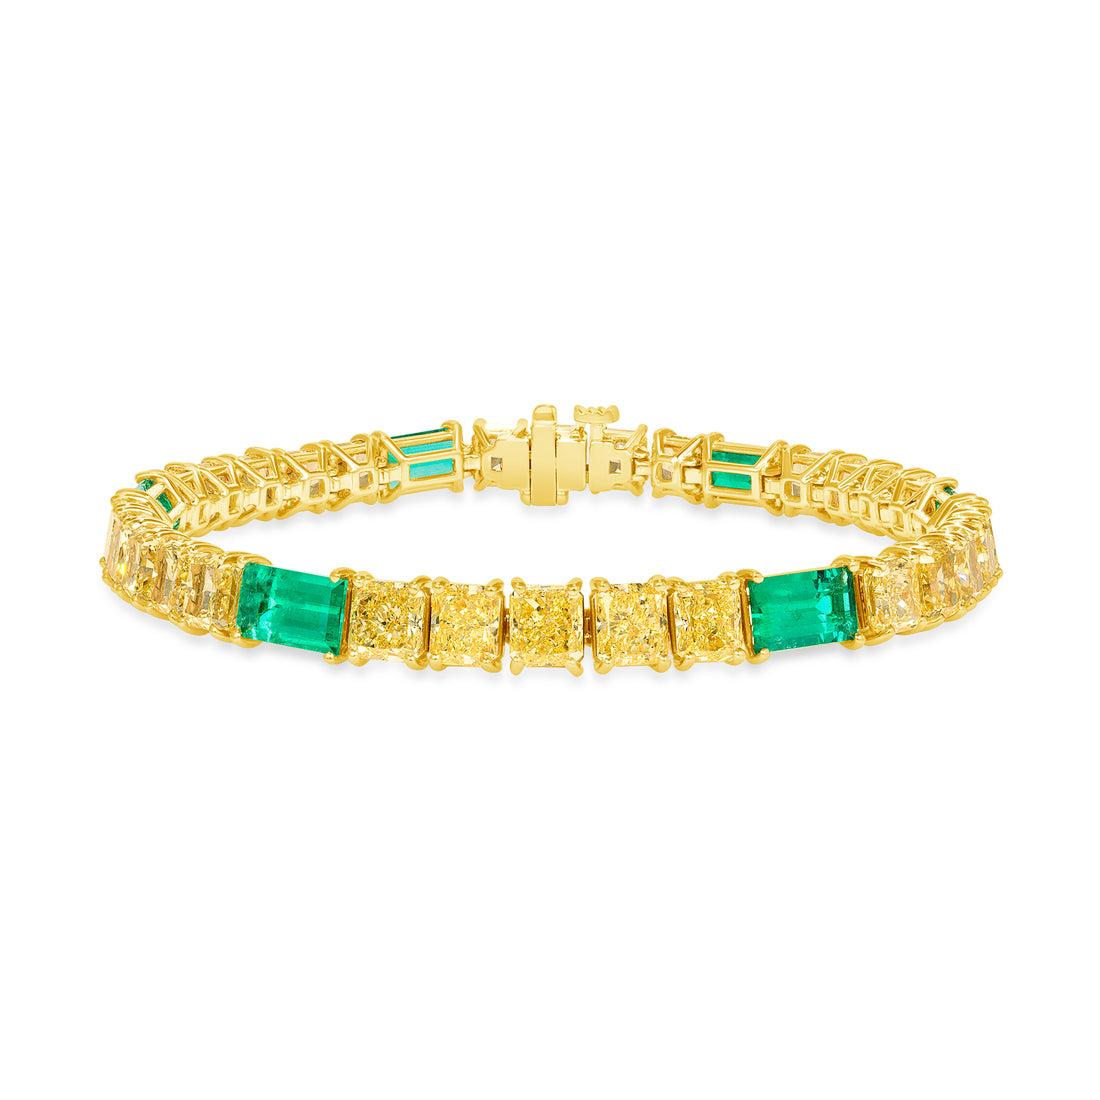 Radiant Cut Fancy Yellow Diamond and Baguette Colombian Emerald Bracelet